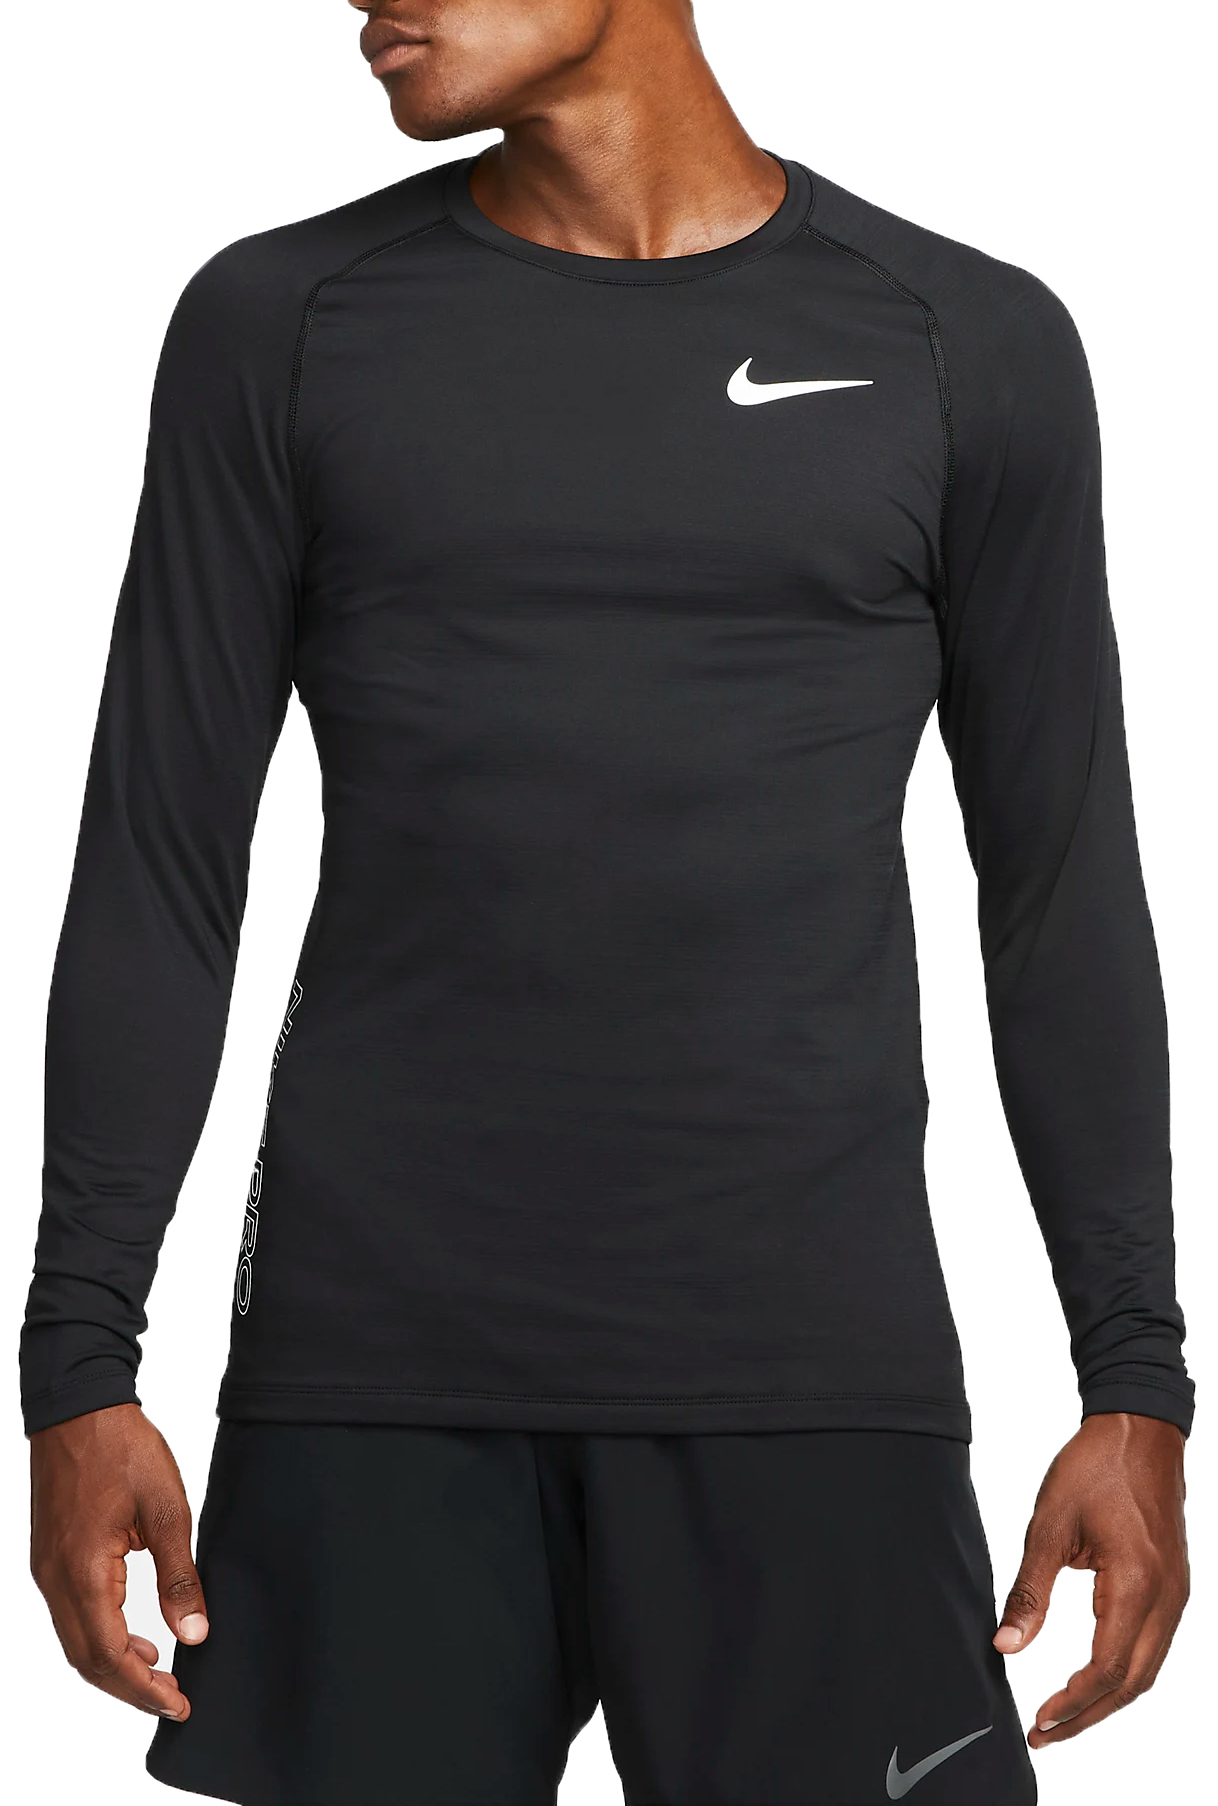 Ilegible Seguir Honorable Long-sleeve T-shirt Nike Pro Warm Sweatshirt Schwarz F010 - Top4Running.com